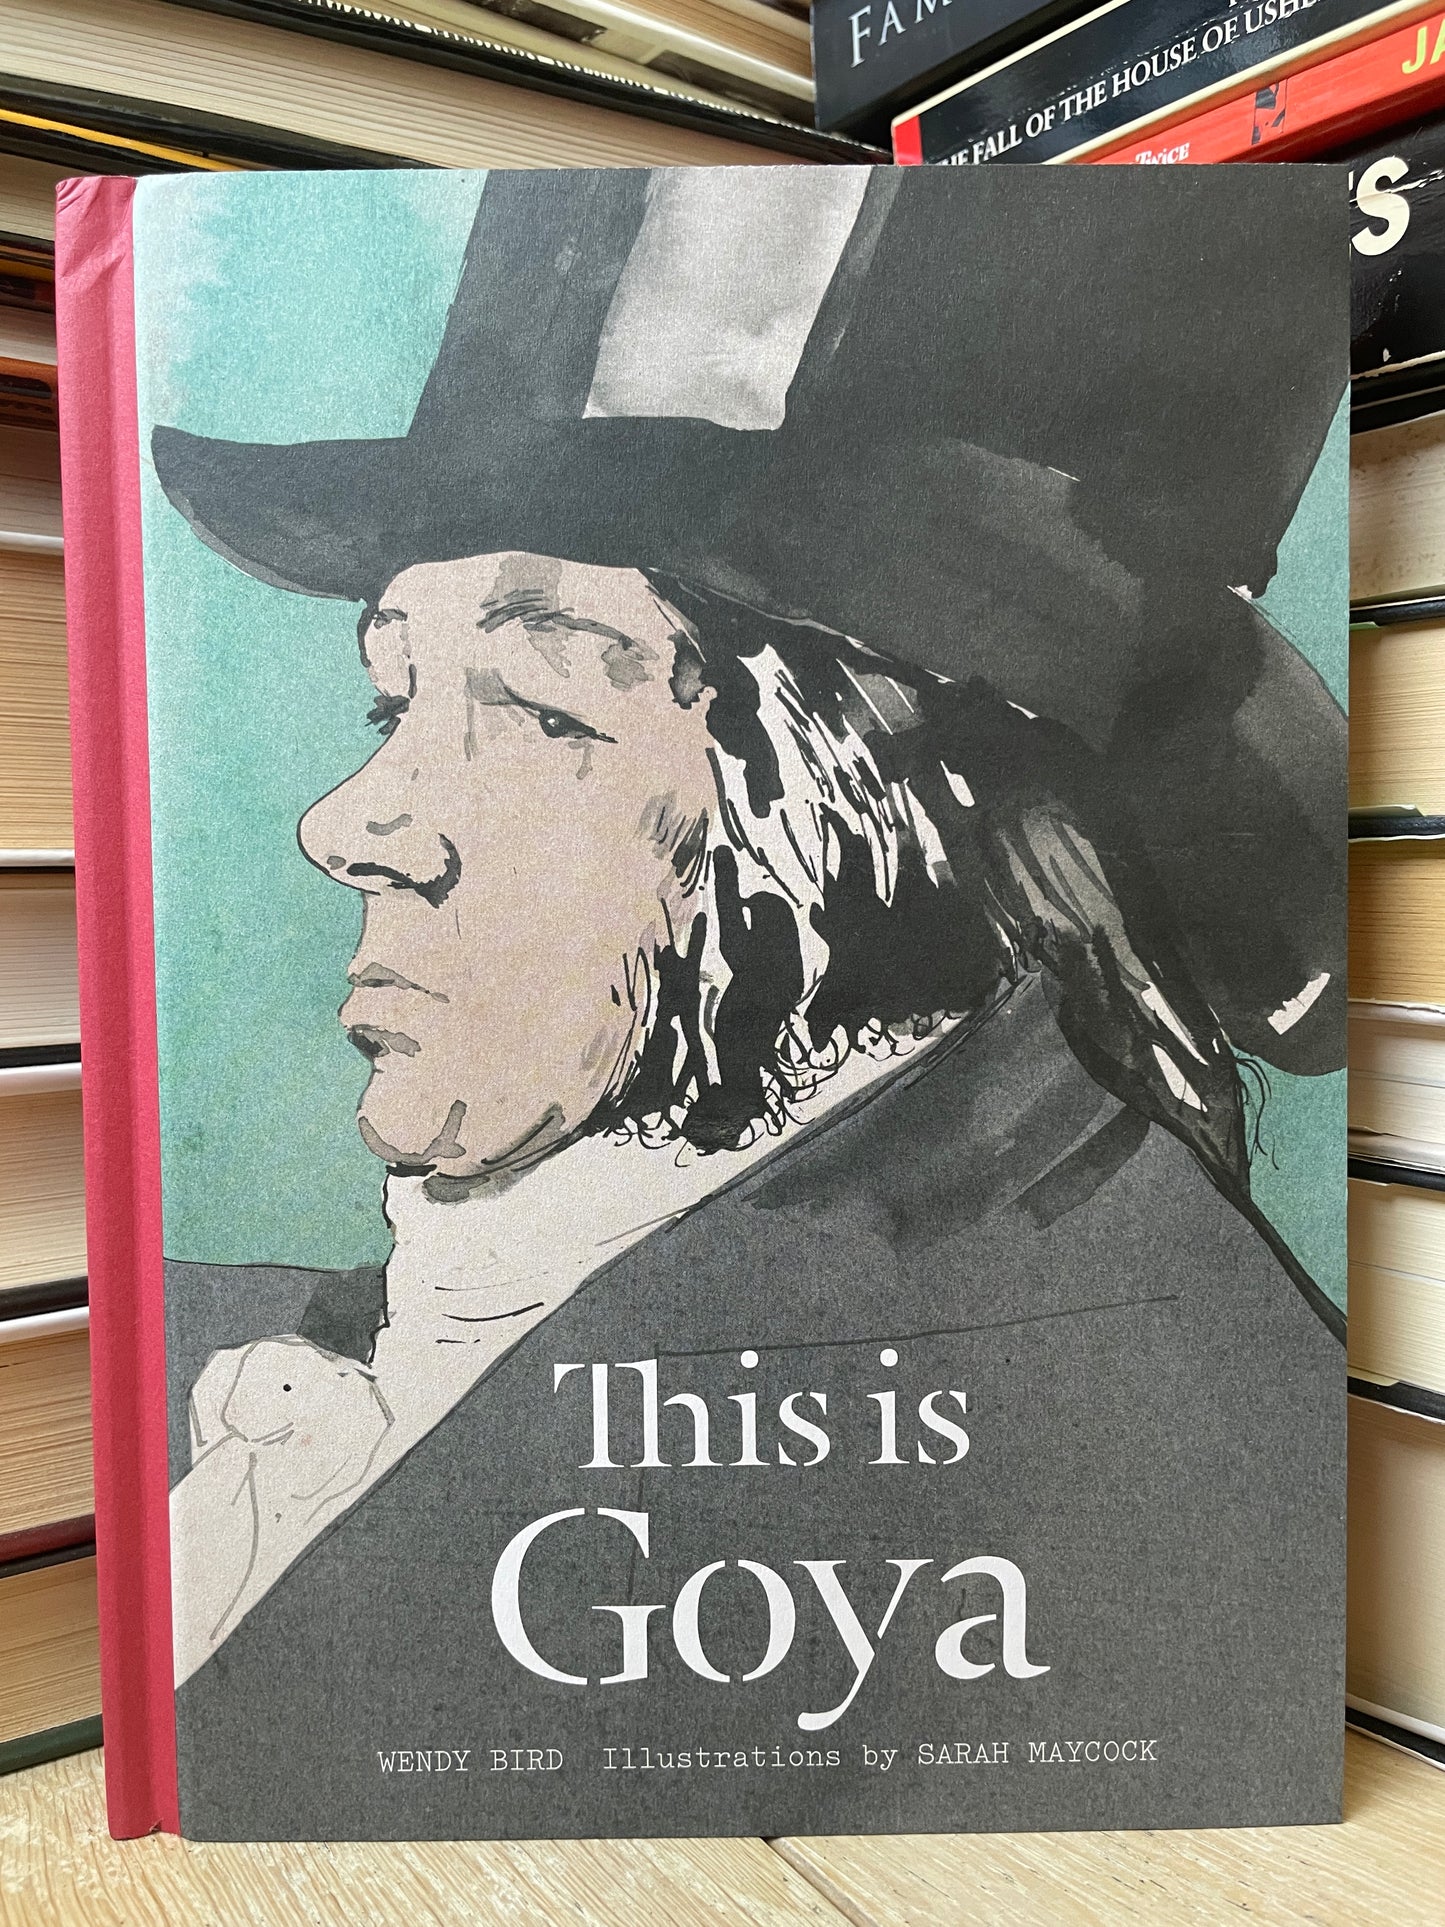 Wendy Bird, Sarah Maycock - This is Goya (NAUJA)